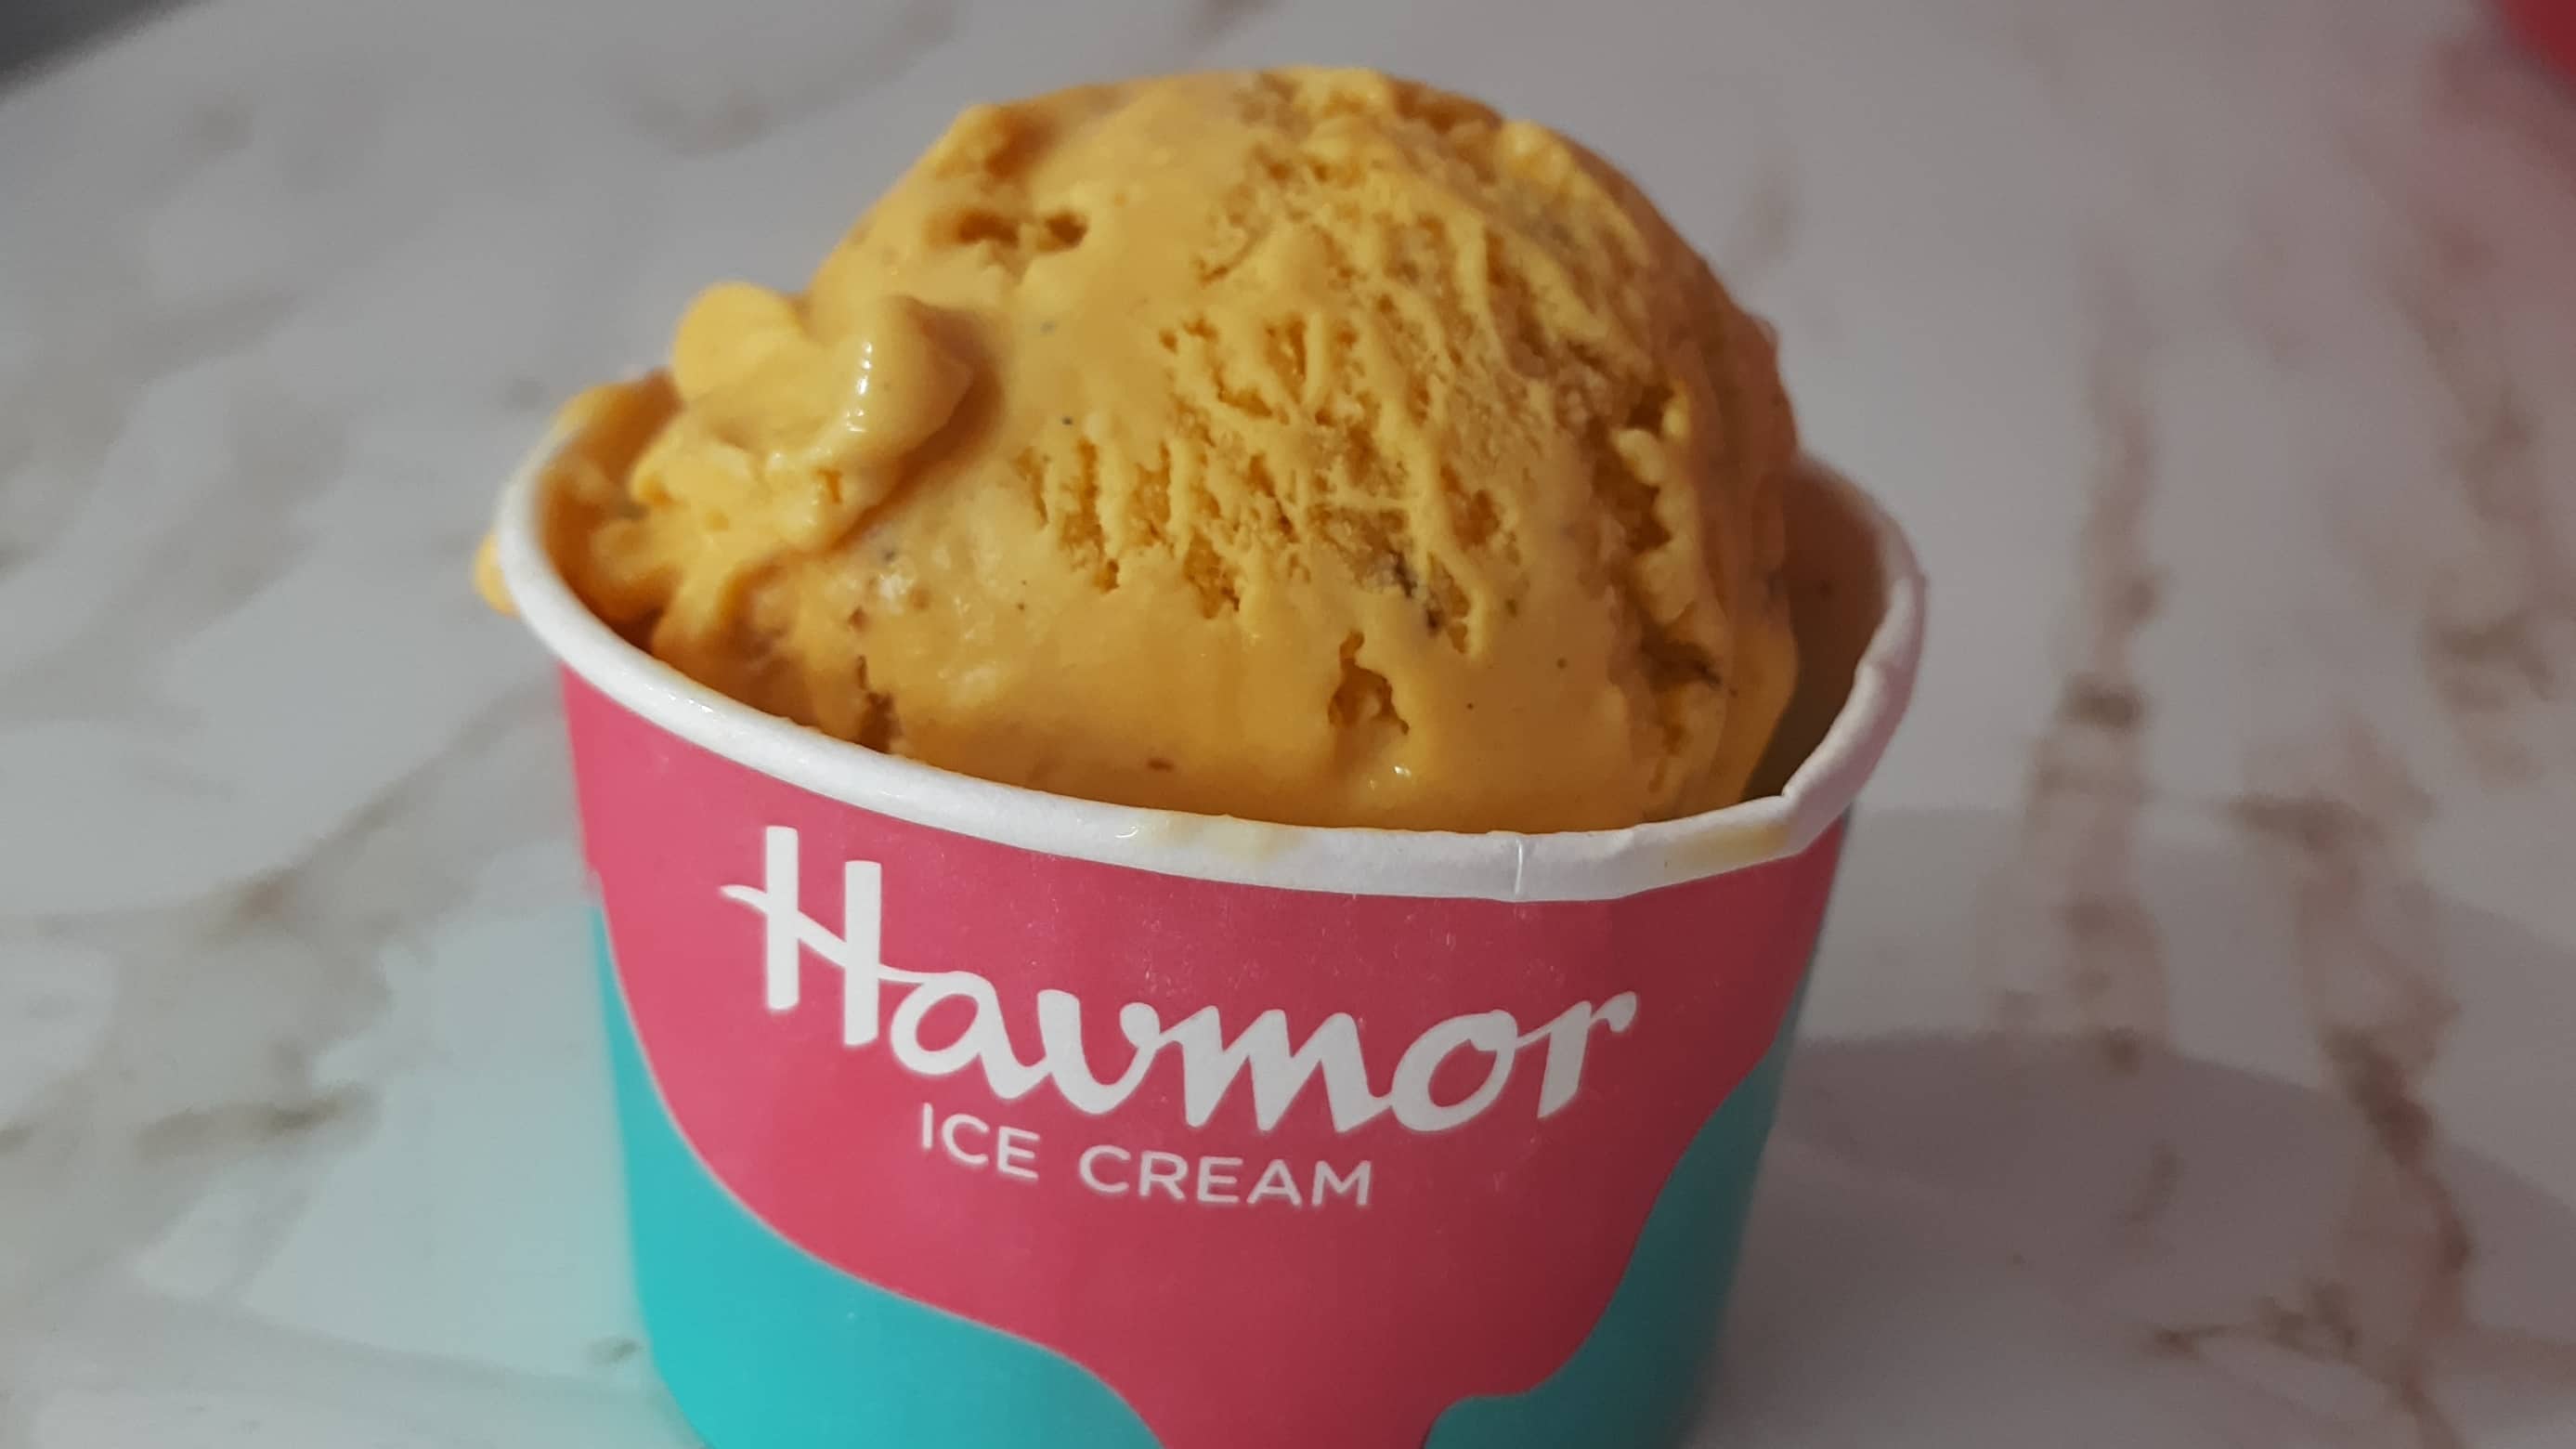 Havmor Ice Cream celebrates month of love with #DessertOfLove campaign